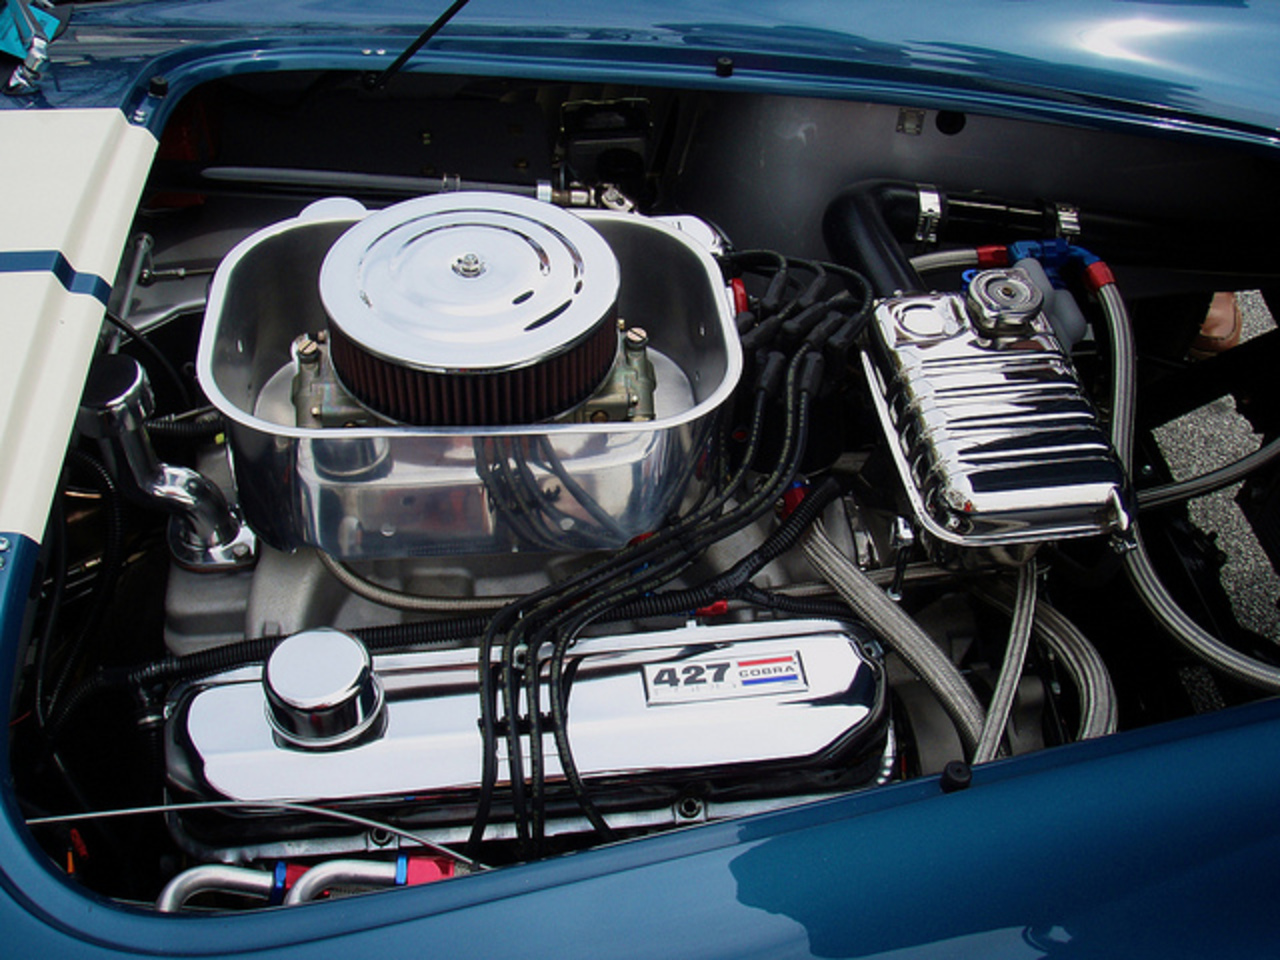 1965 Shelby Cobra 427sc (replica) engine | Flickr - Photo Sharing!